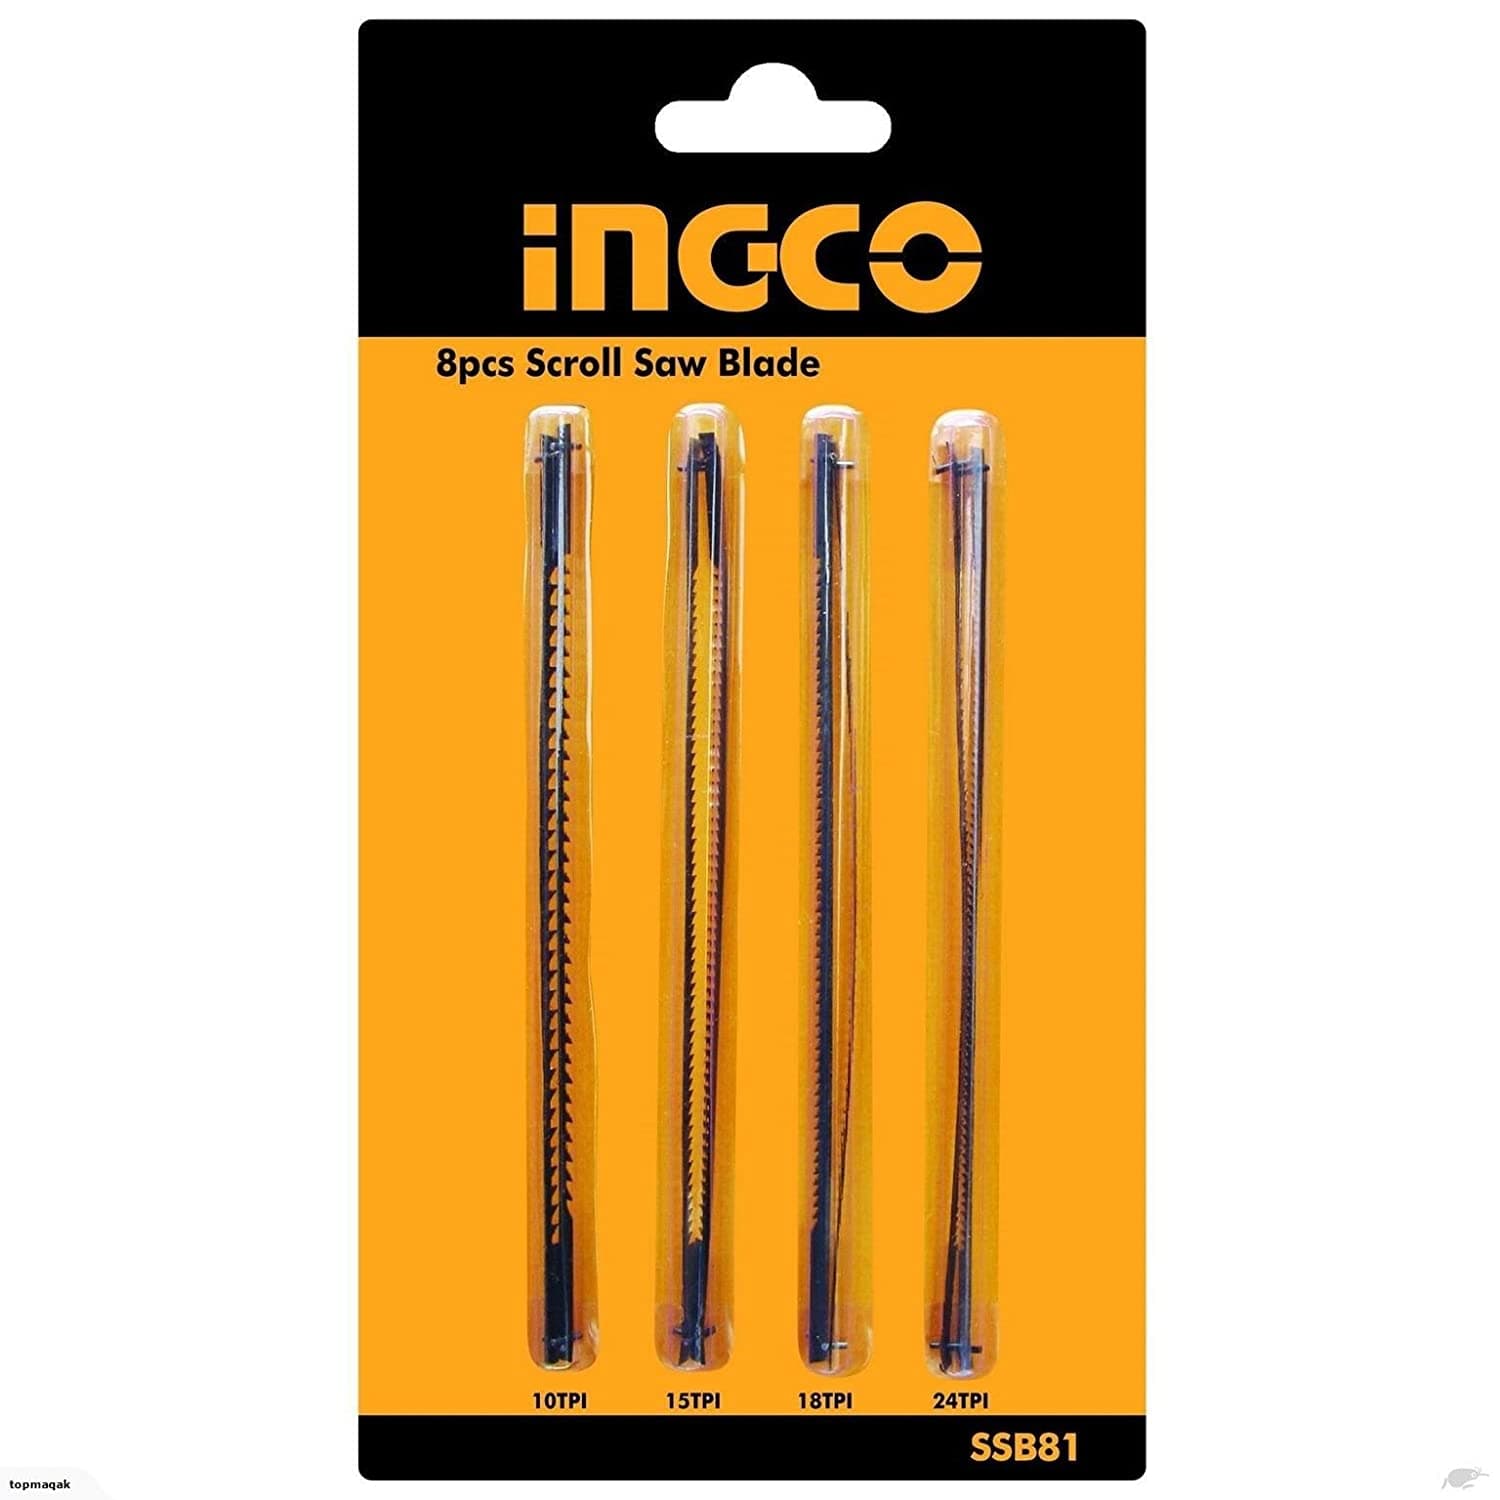 Ingco 8pcs Scroll Saw Blade Pack - Size:10, 15, 18, 24 TPI - SSB81